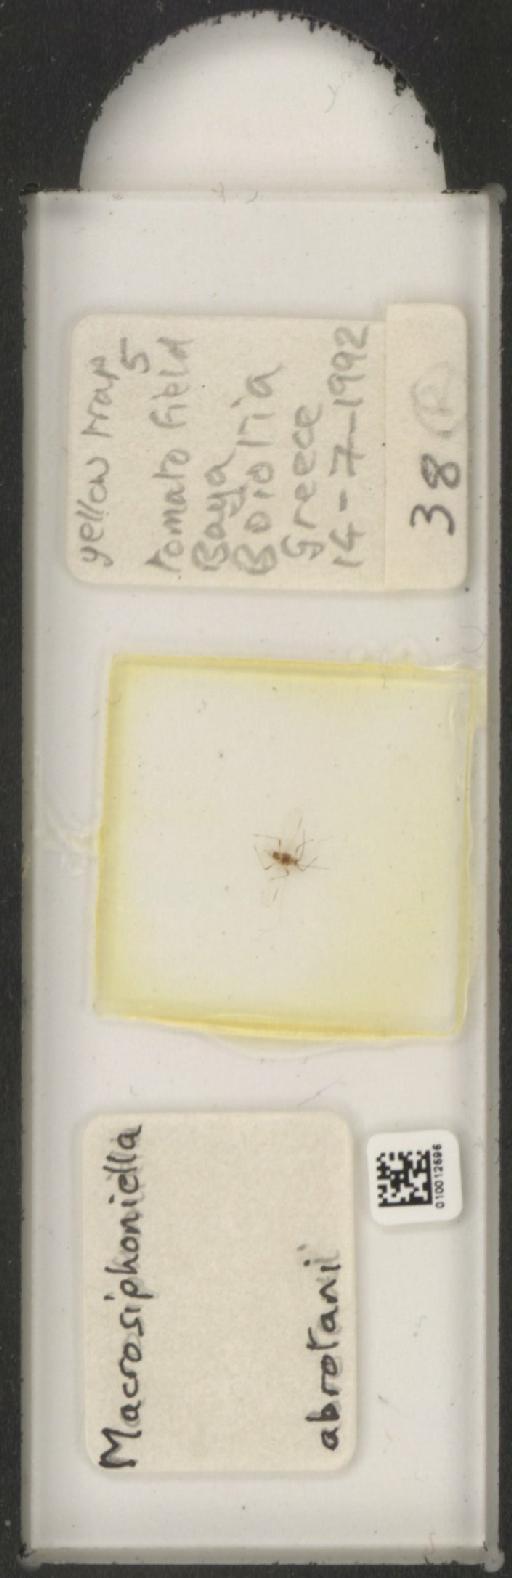 Macrosiphoniella abrotani Walker, 1852 - 010012596_112658_1094710